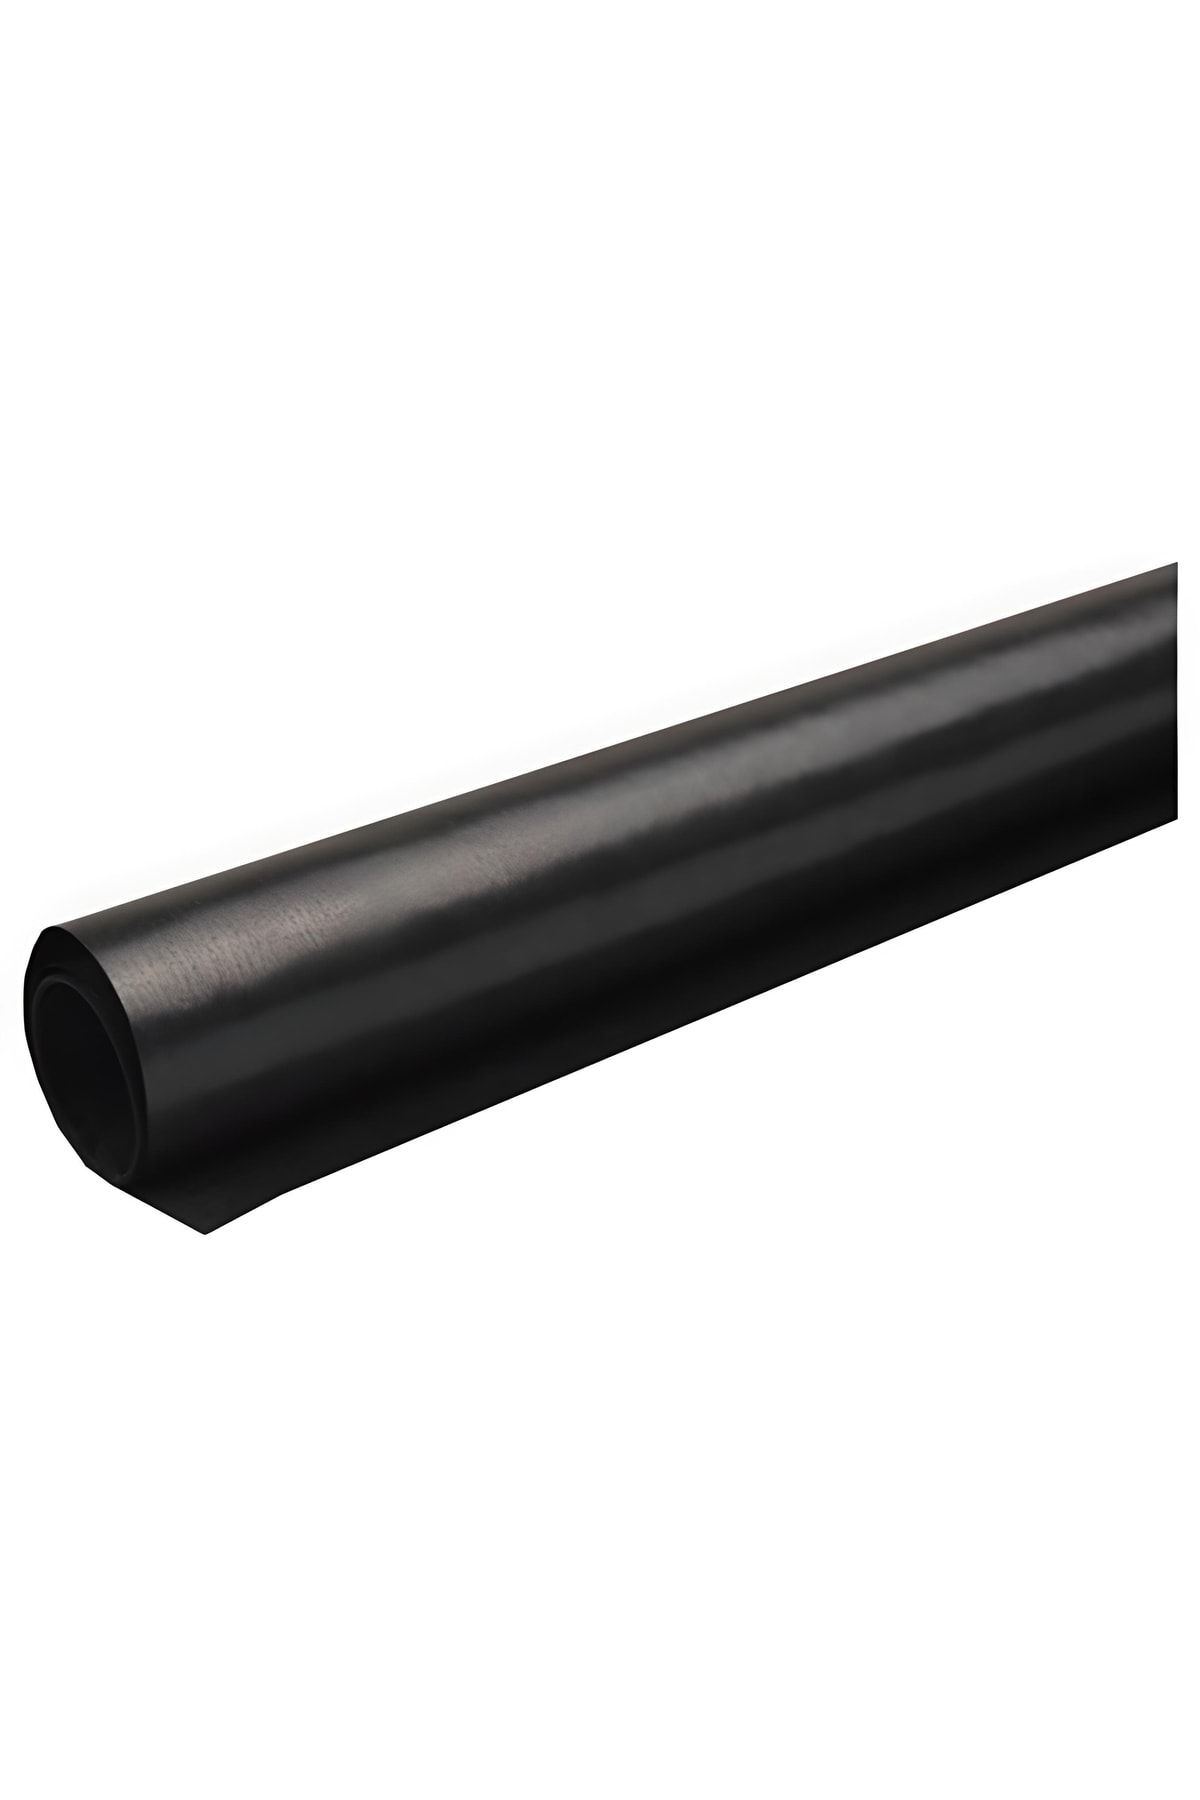 roco paper Uçurtma Kağıdı 42 Gr/m. - Siyah 70*100 Cm (16'LI) (500GR)